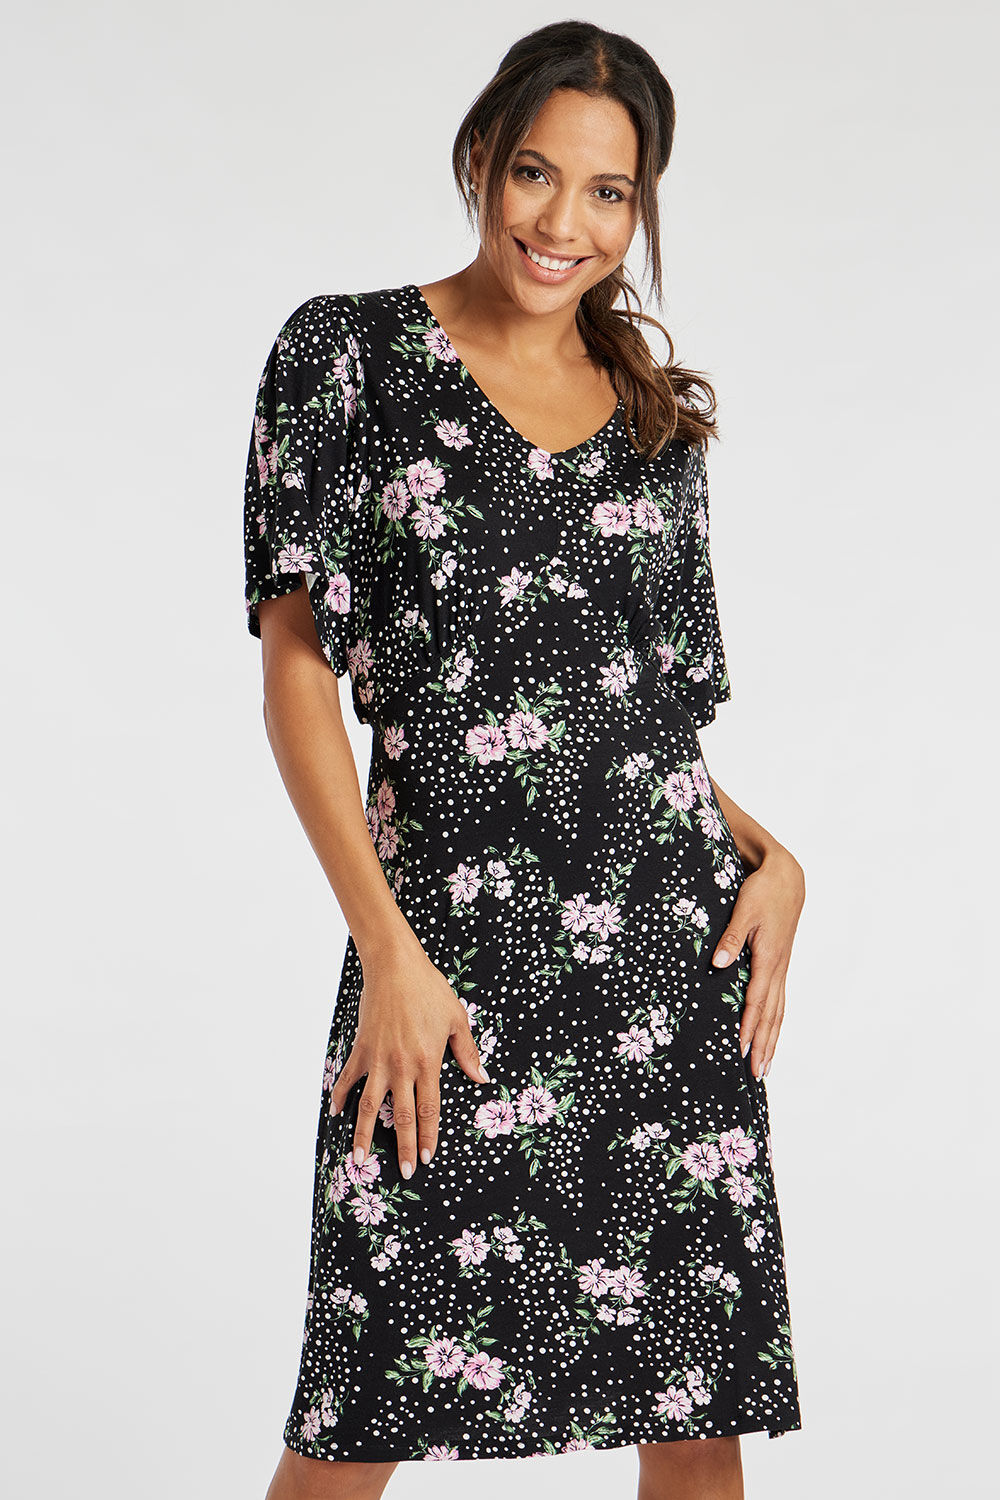 Bonmarche Black Floral Spot Print Jersey Tea Dress, Size: 16